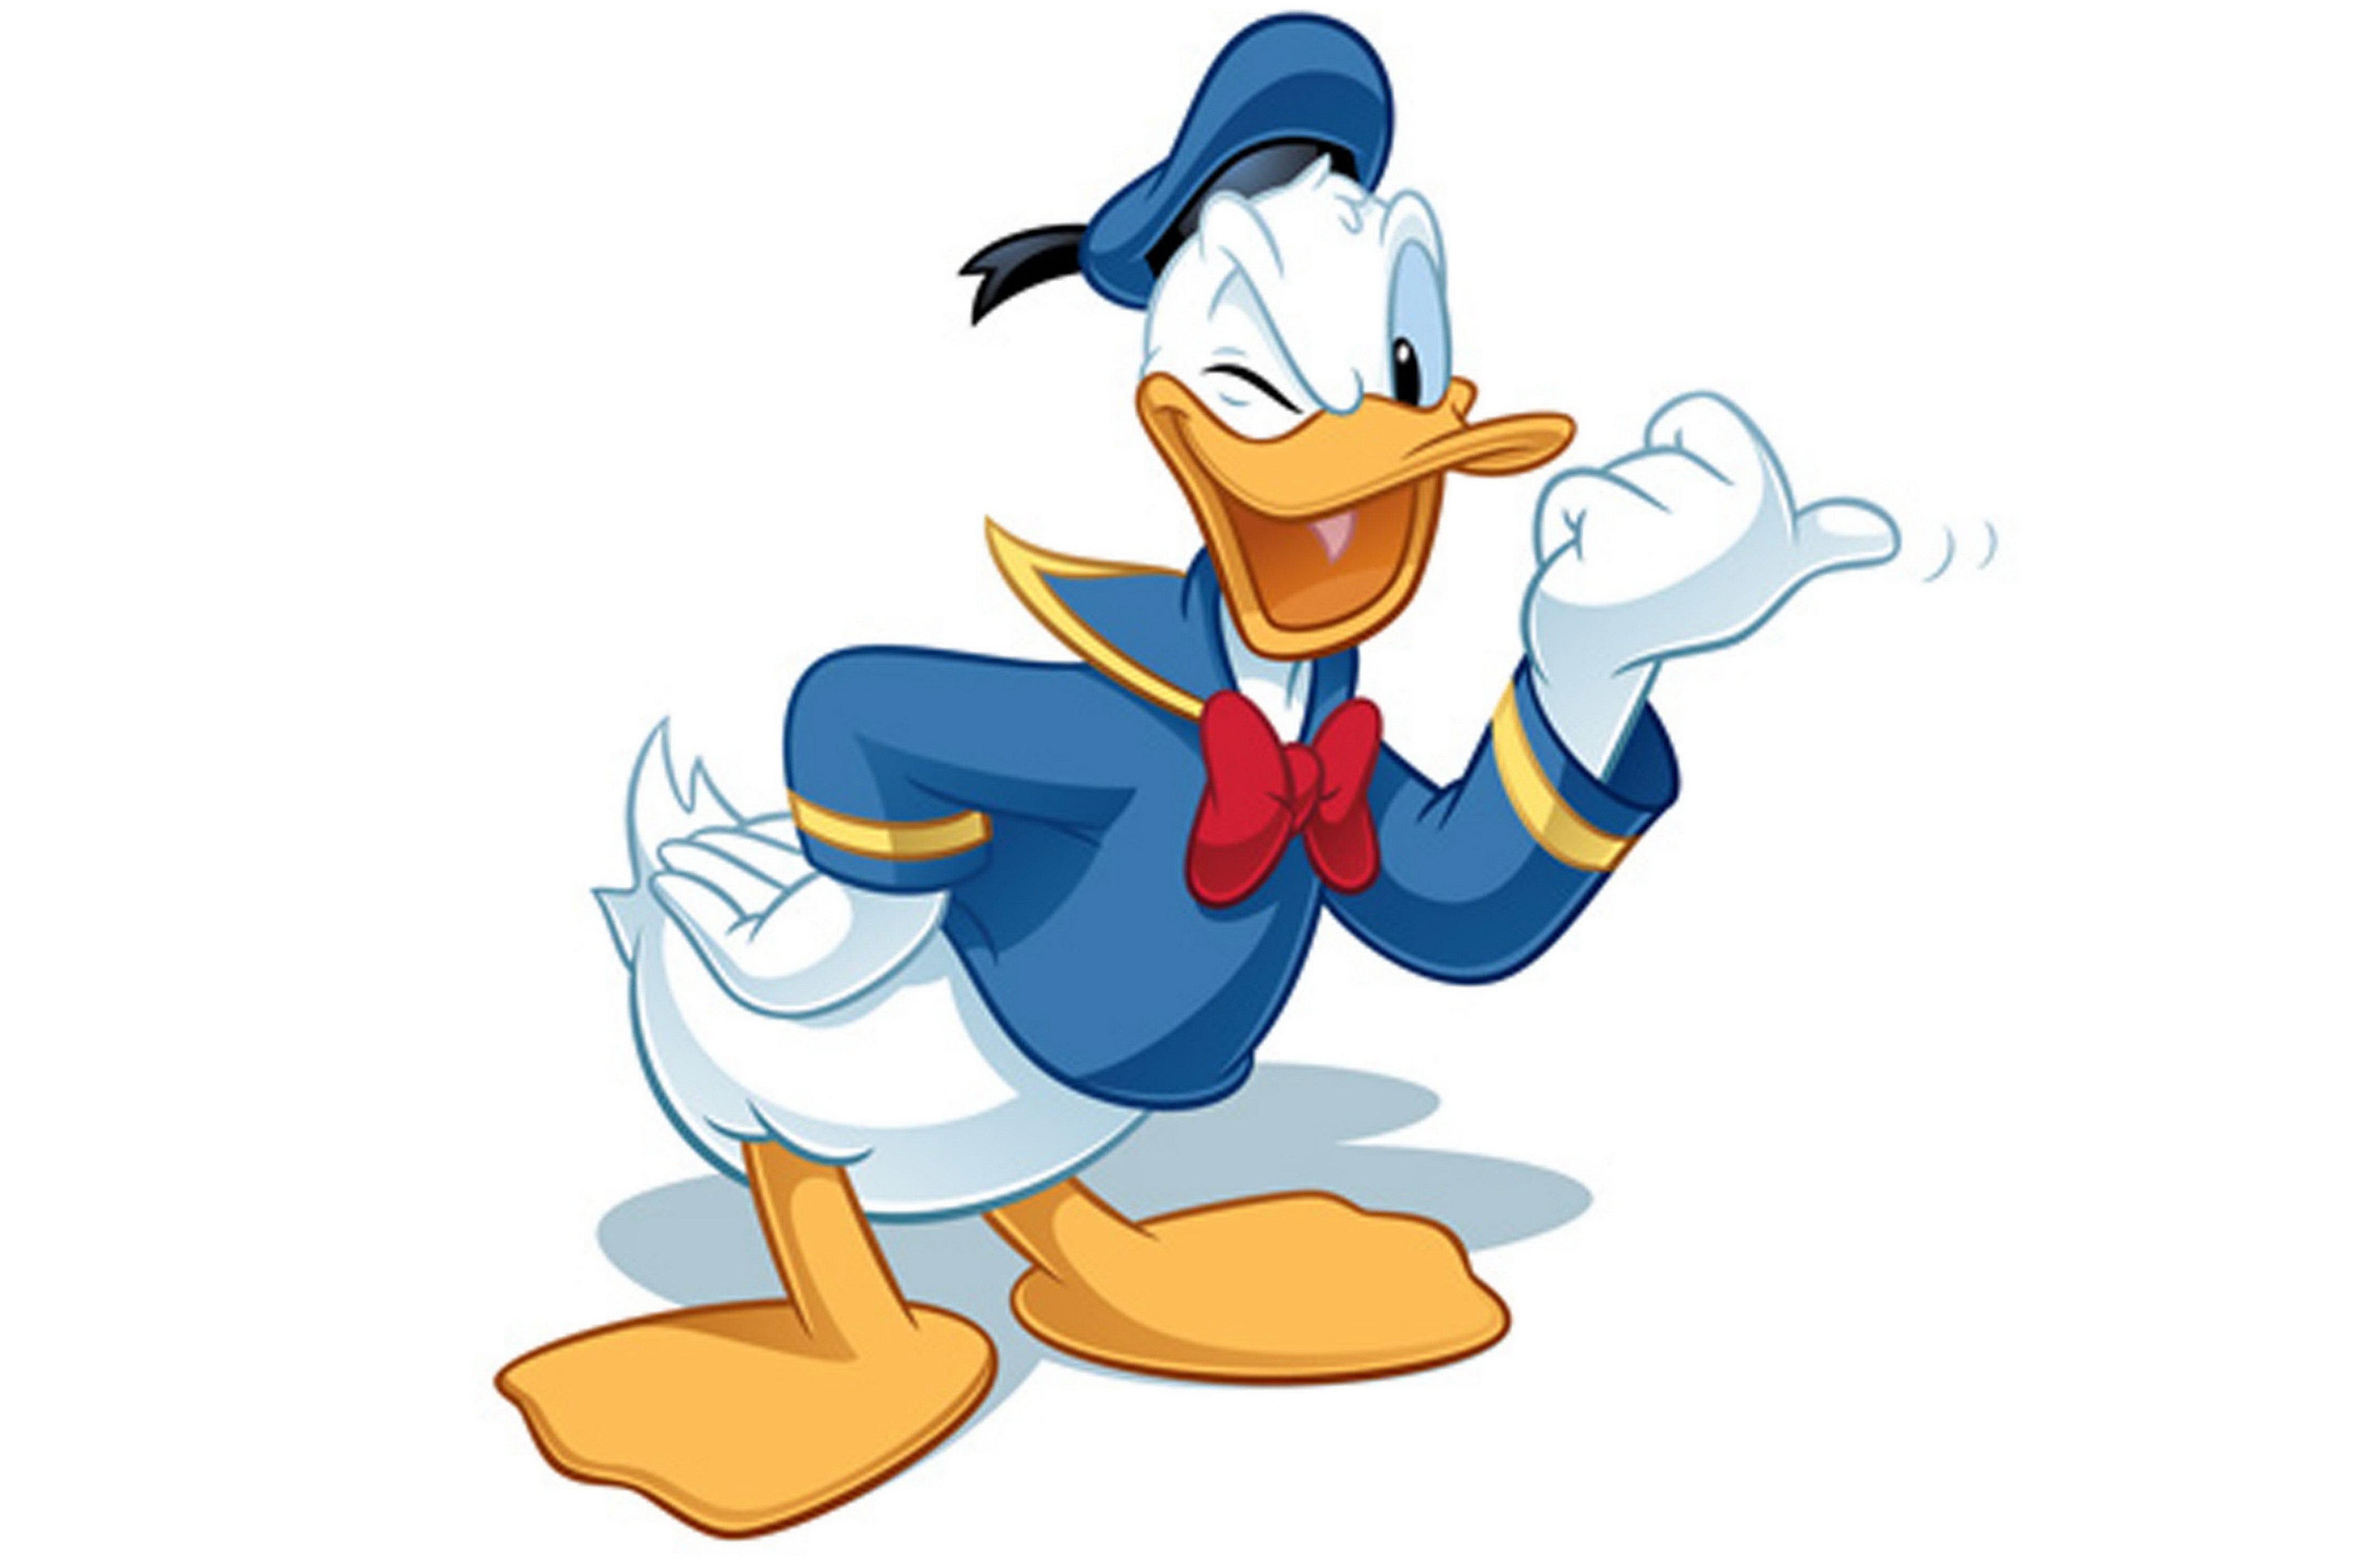 Donald Duck Cartoons Backgrounds Wallpaper Mewallpapers.ga.